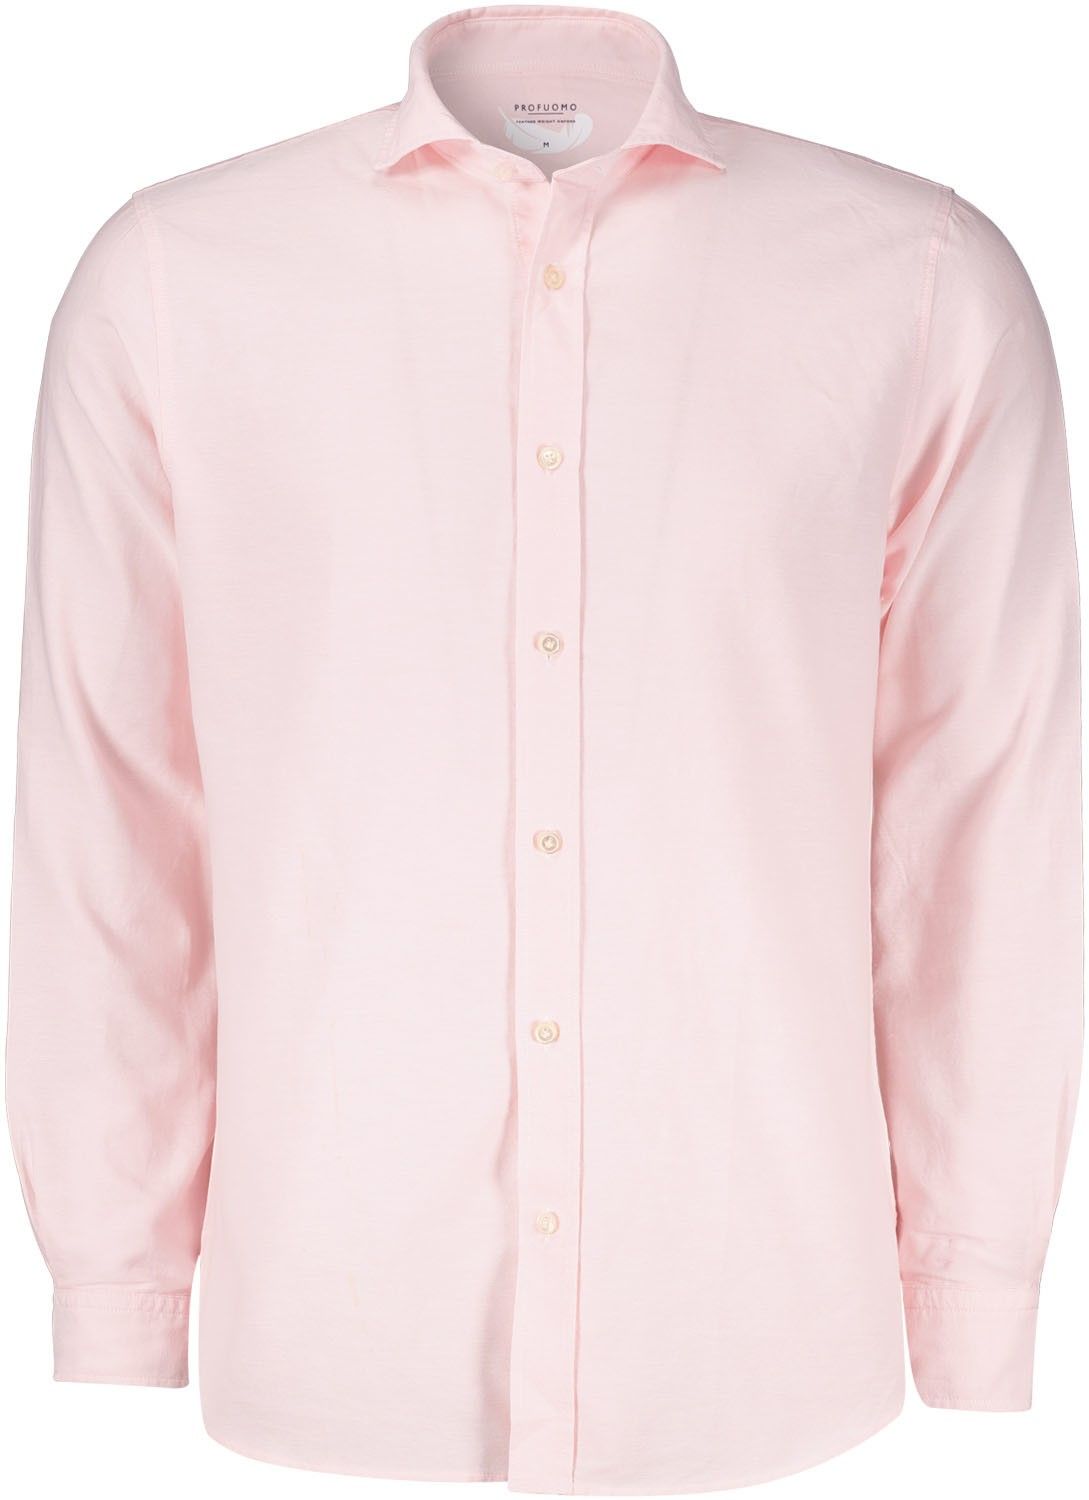 Profuomo Overhemd Roze 